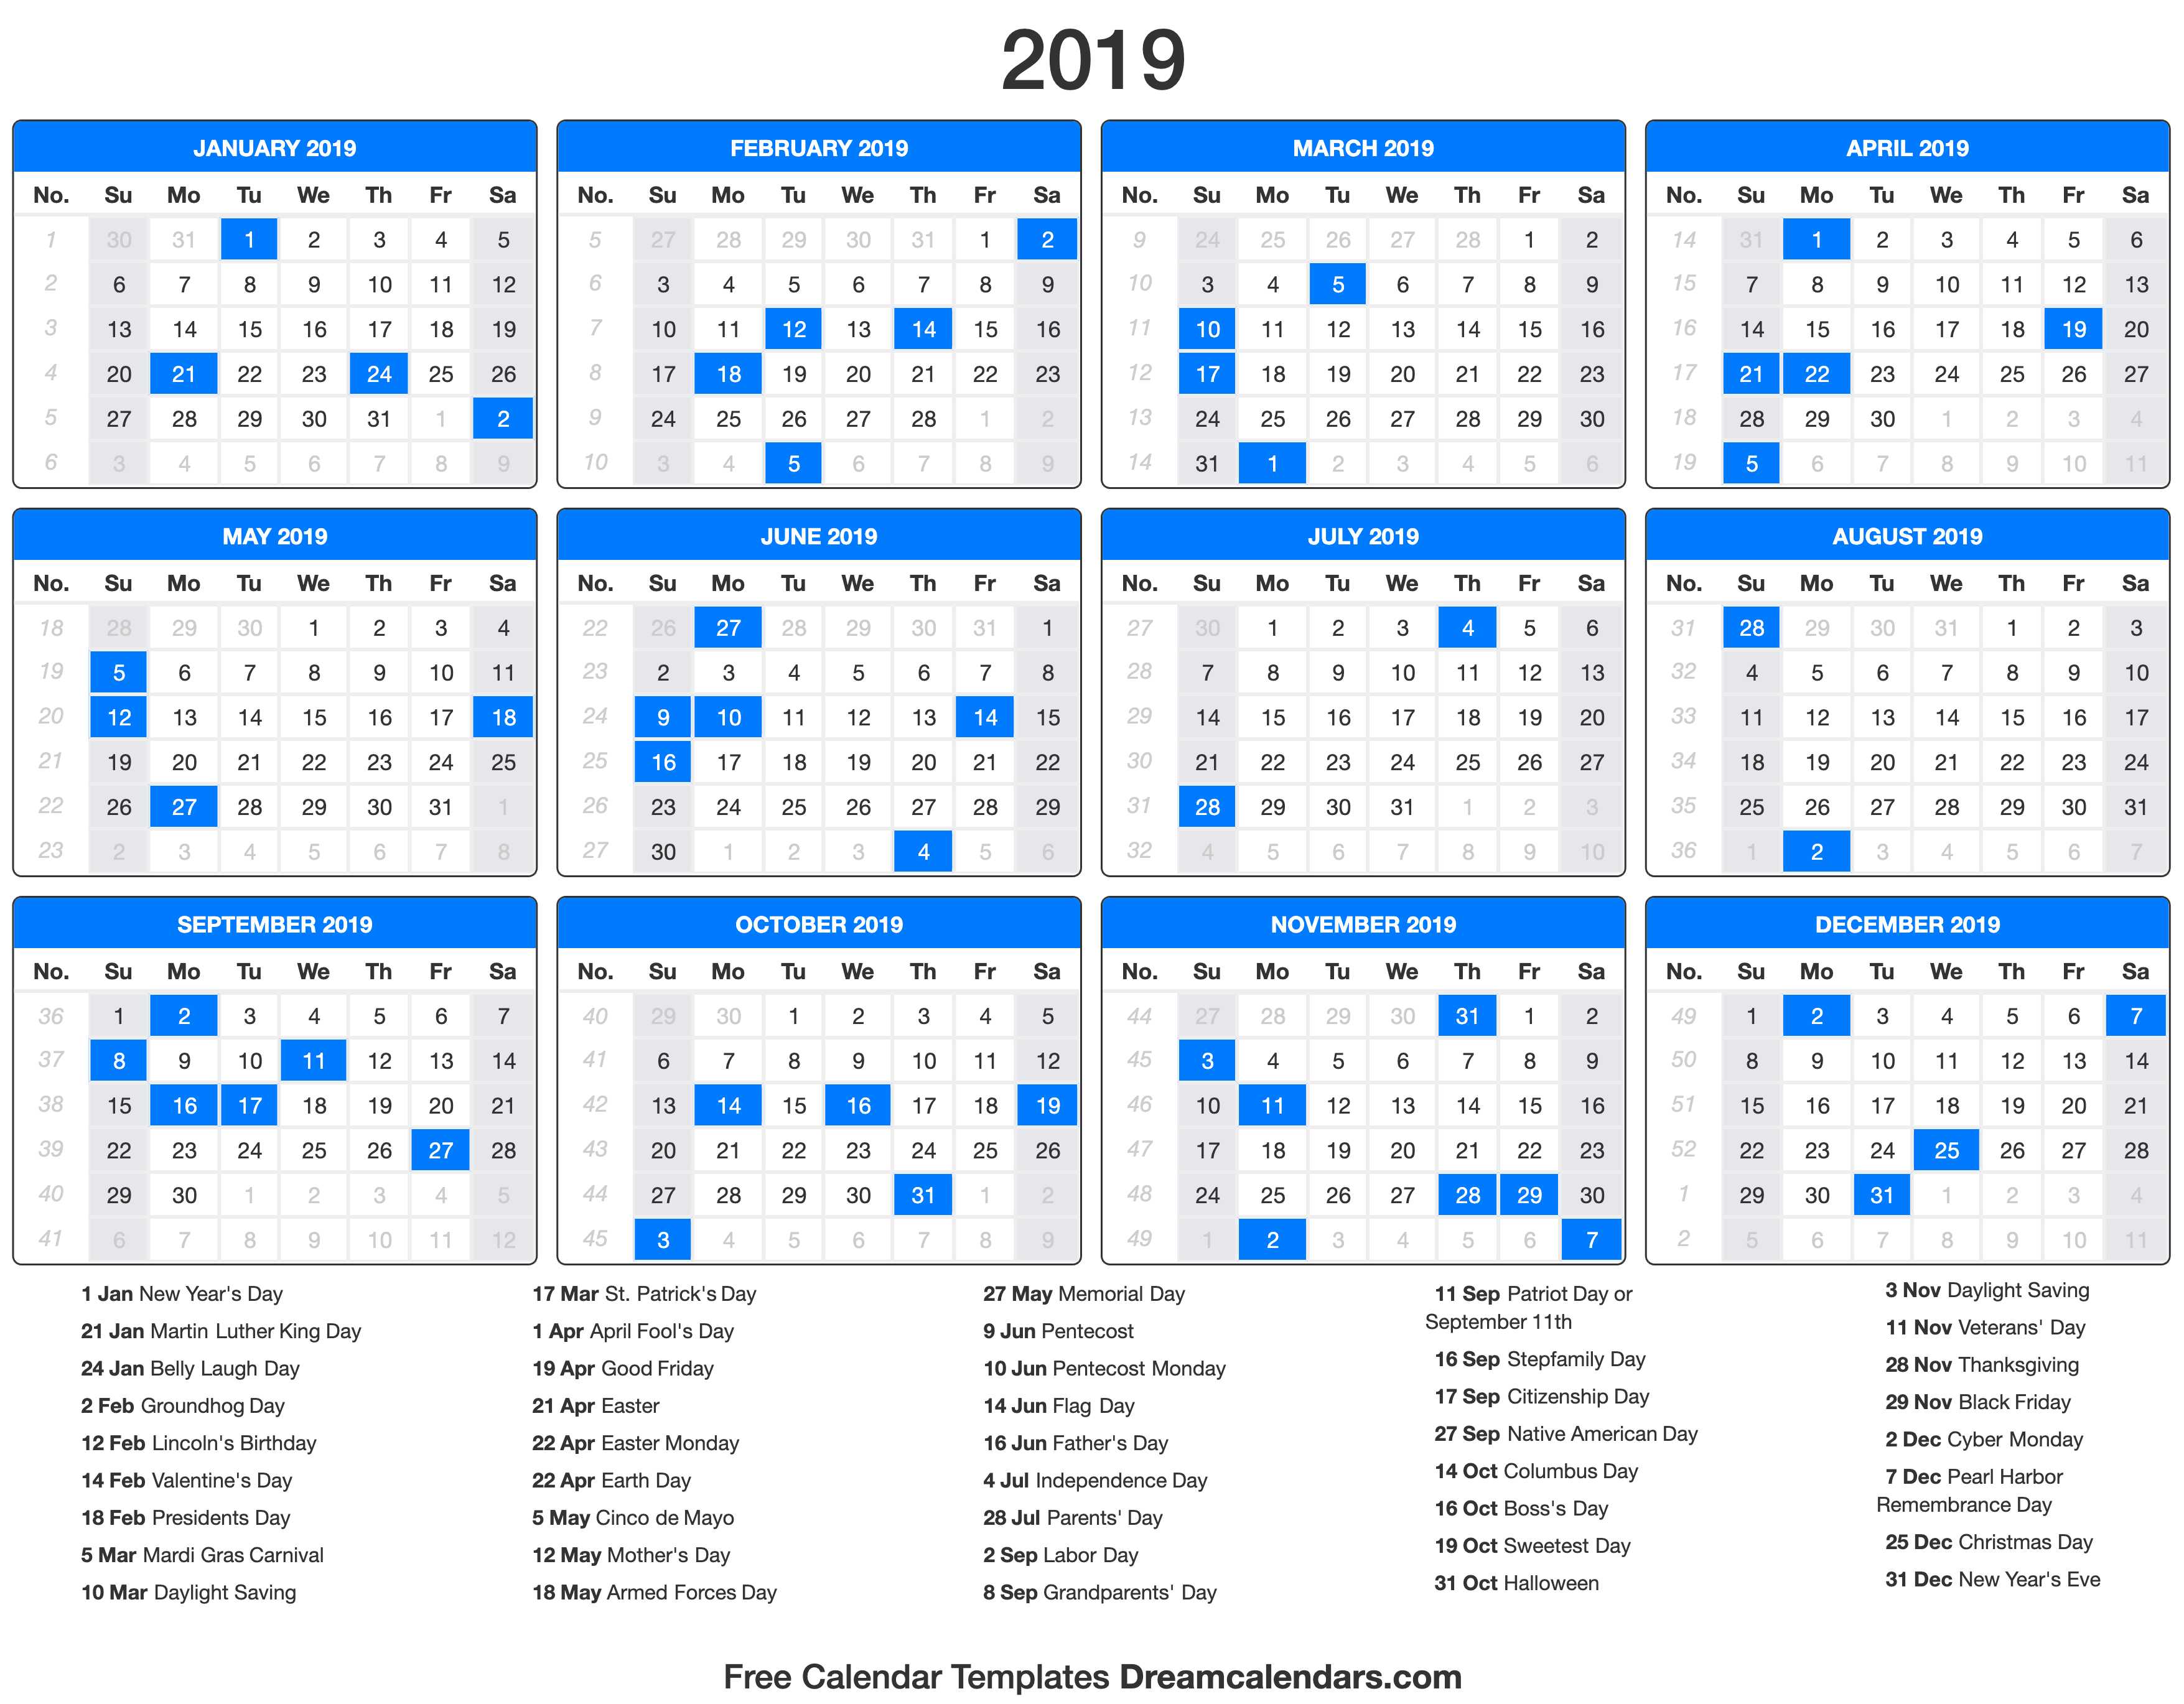 2025-calendar-with-holidays-printable-printable-word-searches